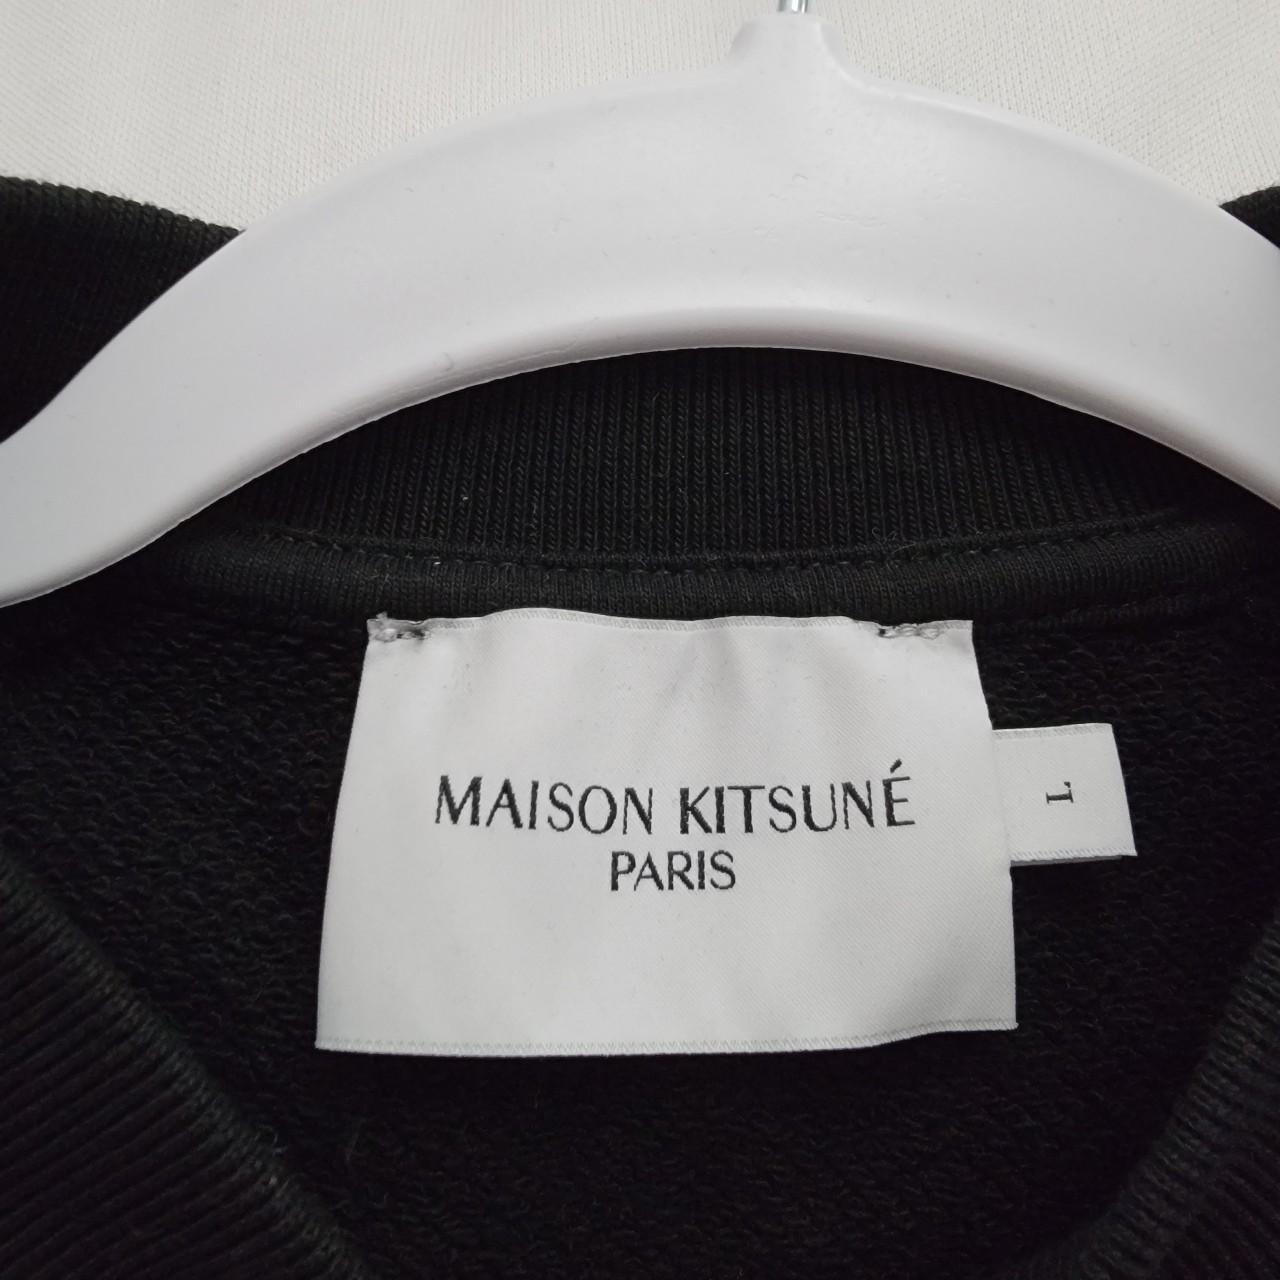 Product Image 3 - details:
💛 Maison Kitsune Sweatshirt
💛 Worn